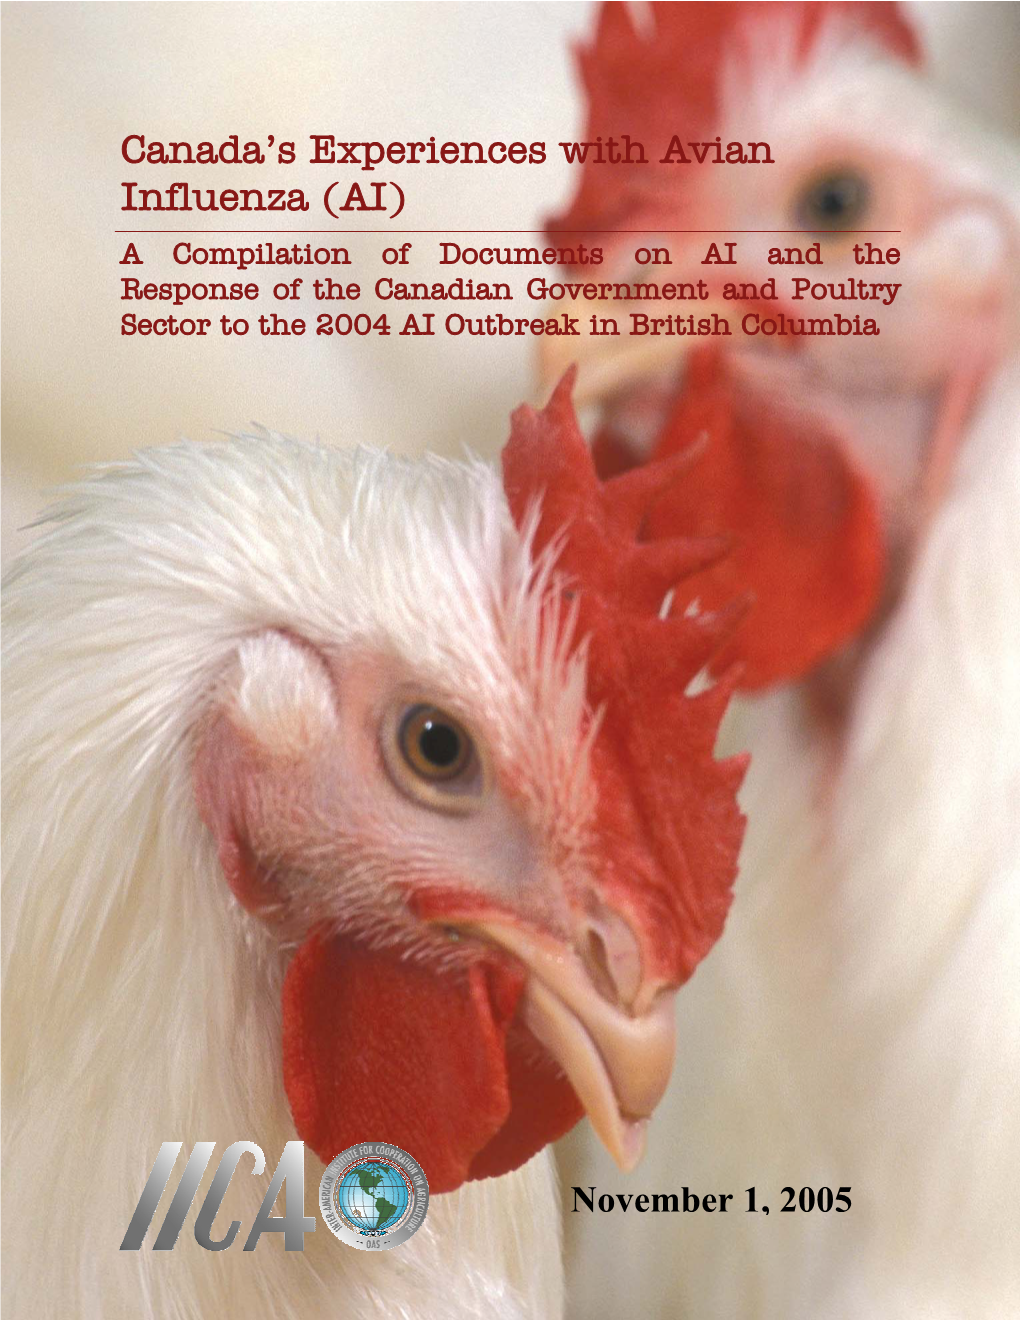 Canada's Avian Influenza Experience